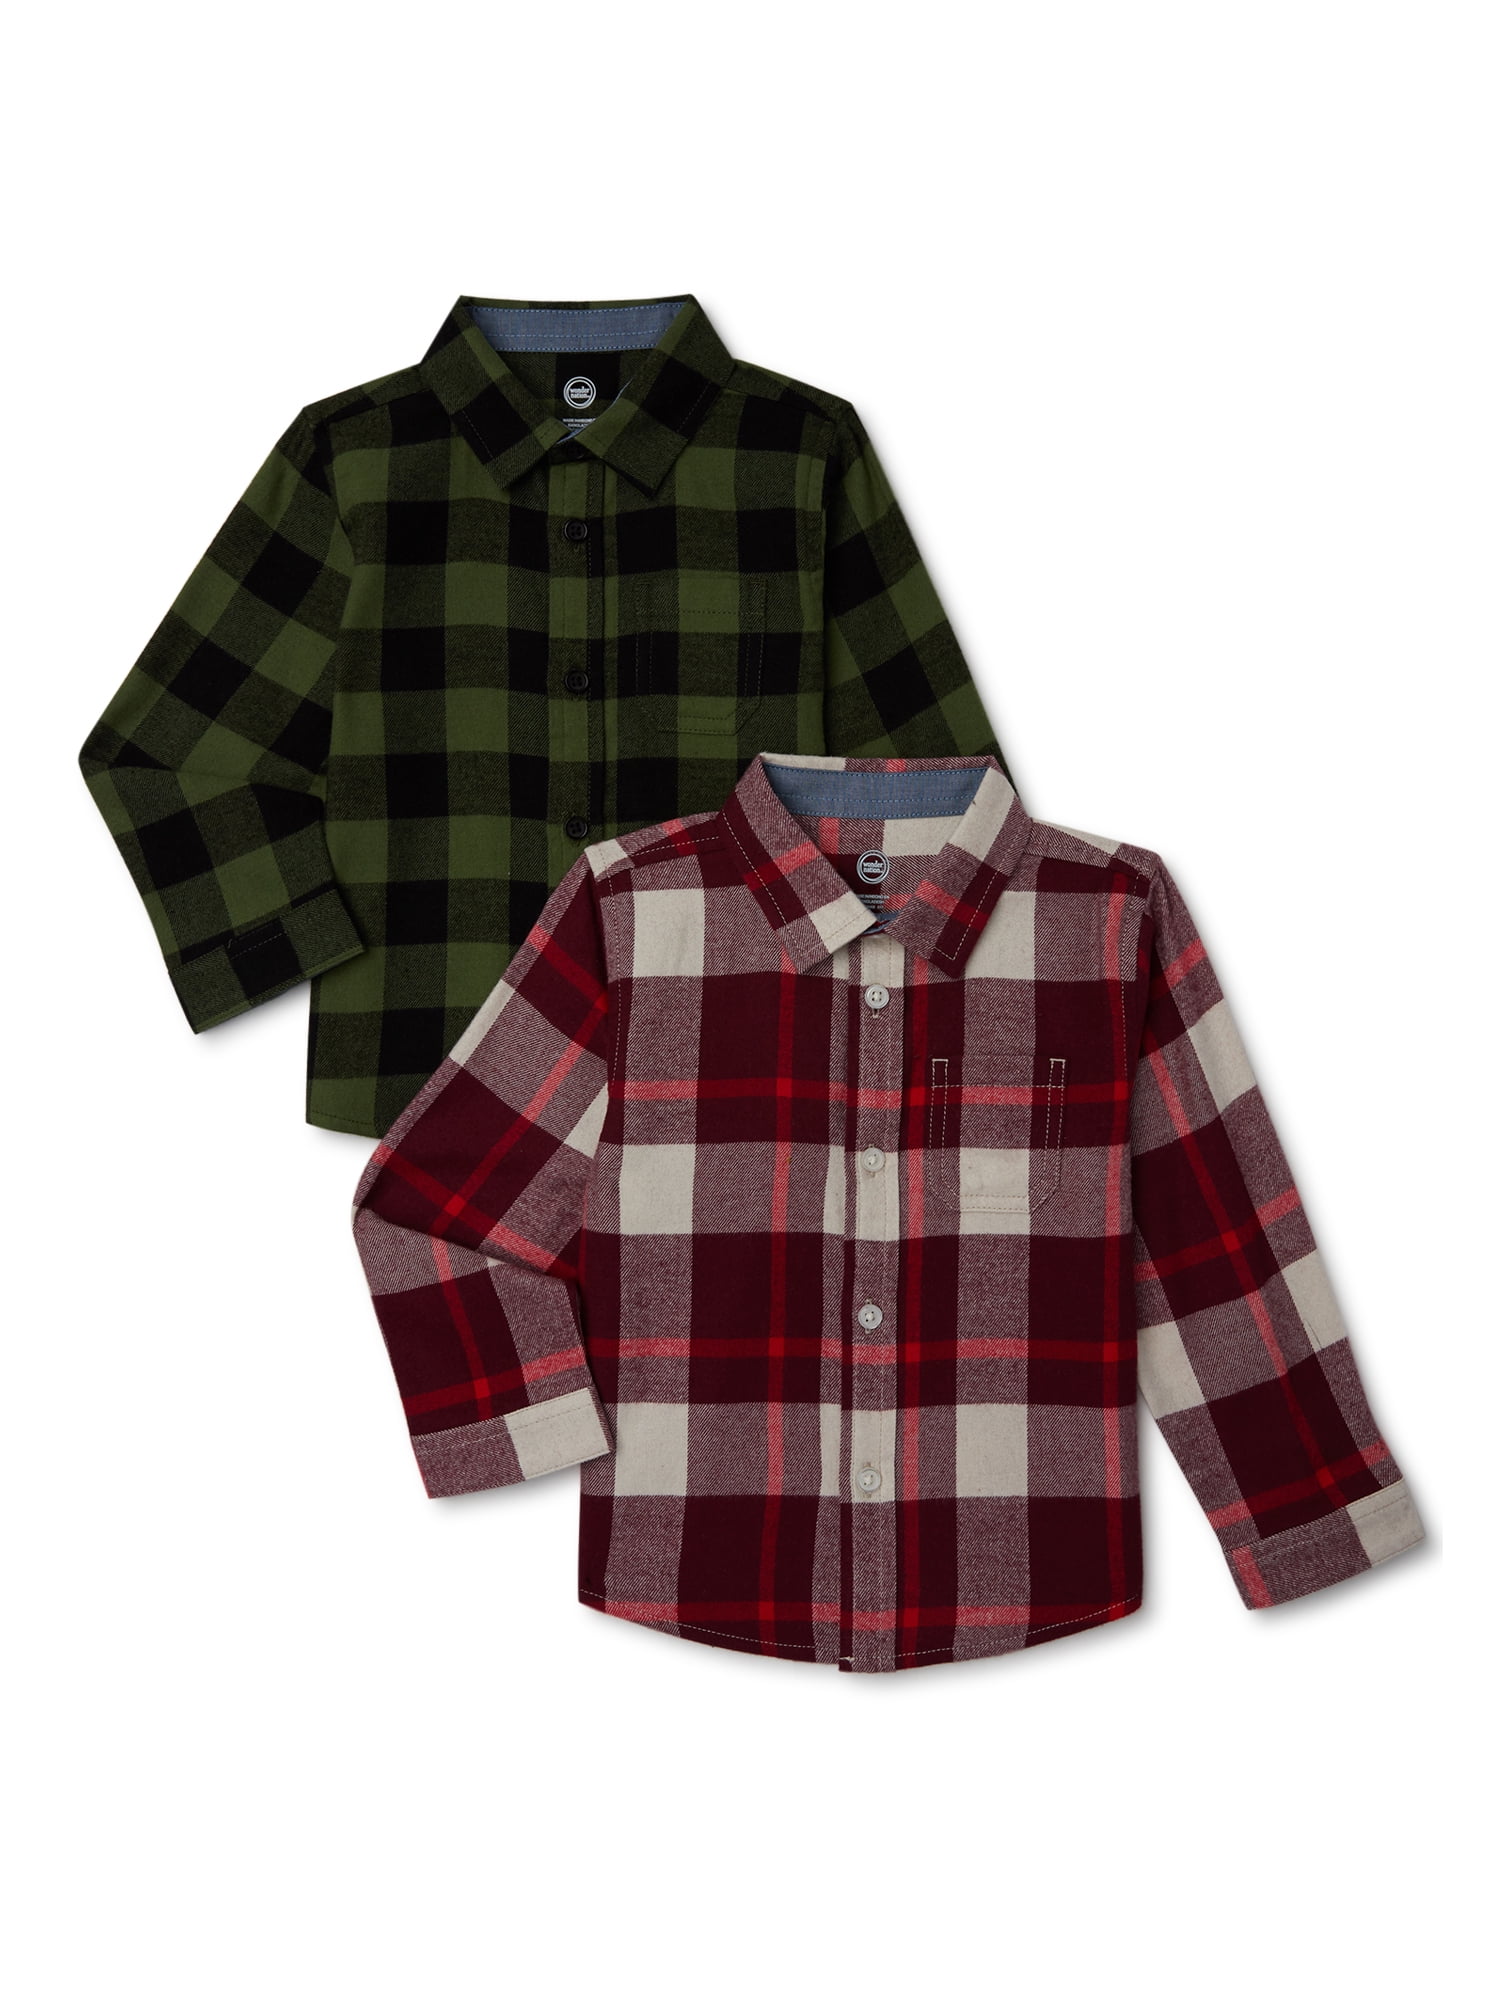 Alvivi Infant Baby Boys Girls Long Sleeve Plaid Check Flannel Shirts Cotton Button Down Shirt Tops T-Shirt 